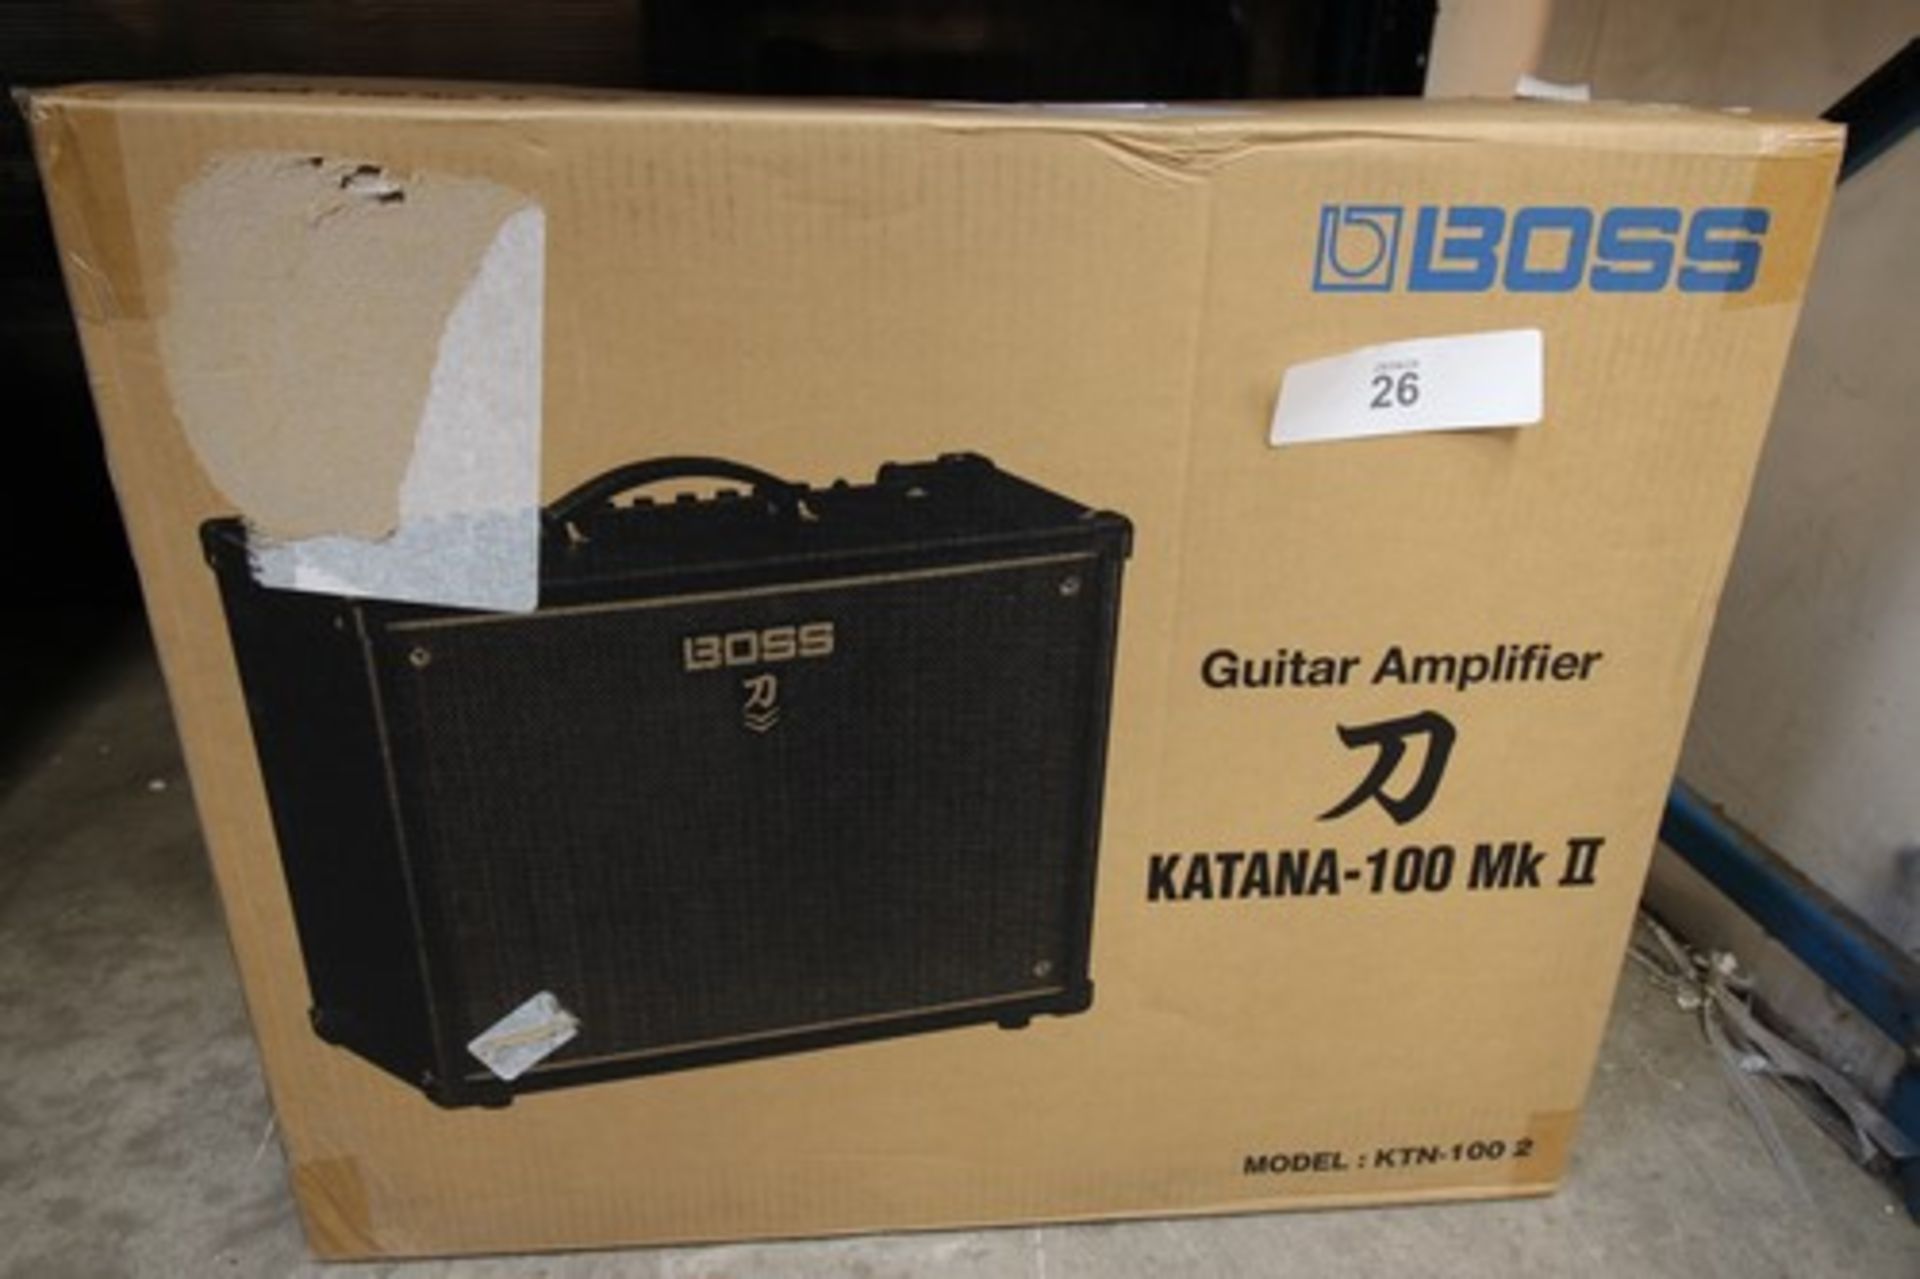 1 x Boss Katana-100 MK2 D guitar amplifier, model: KTN-1002 - sealed new in box (GS6)